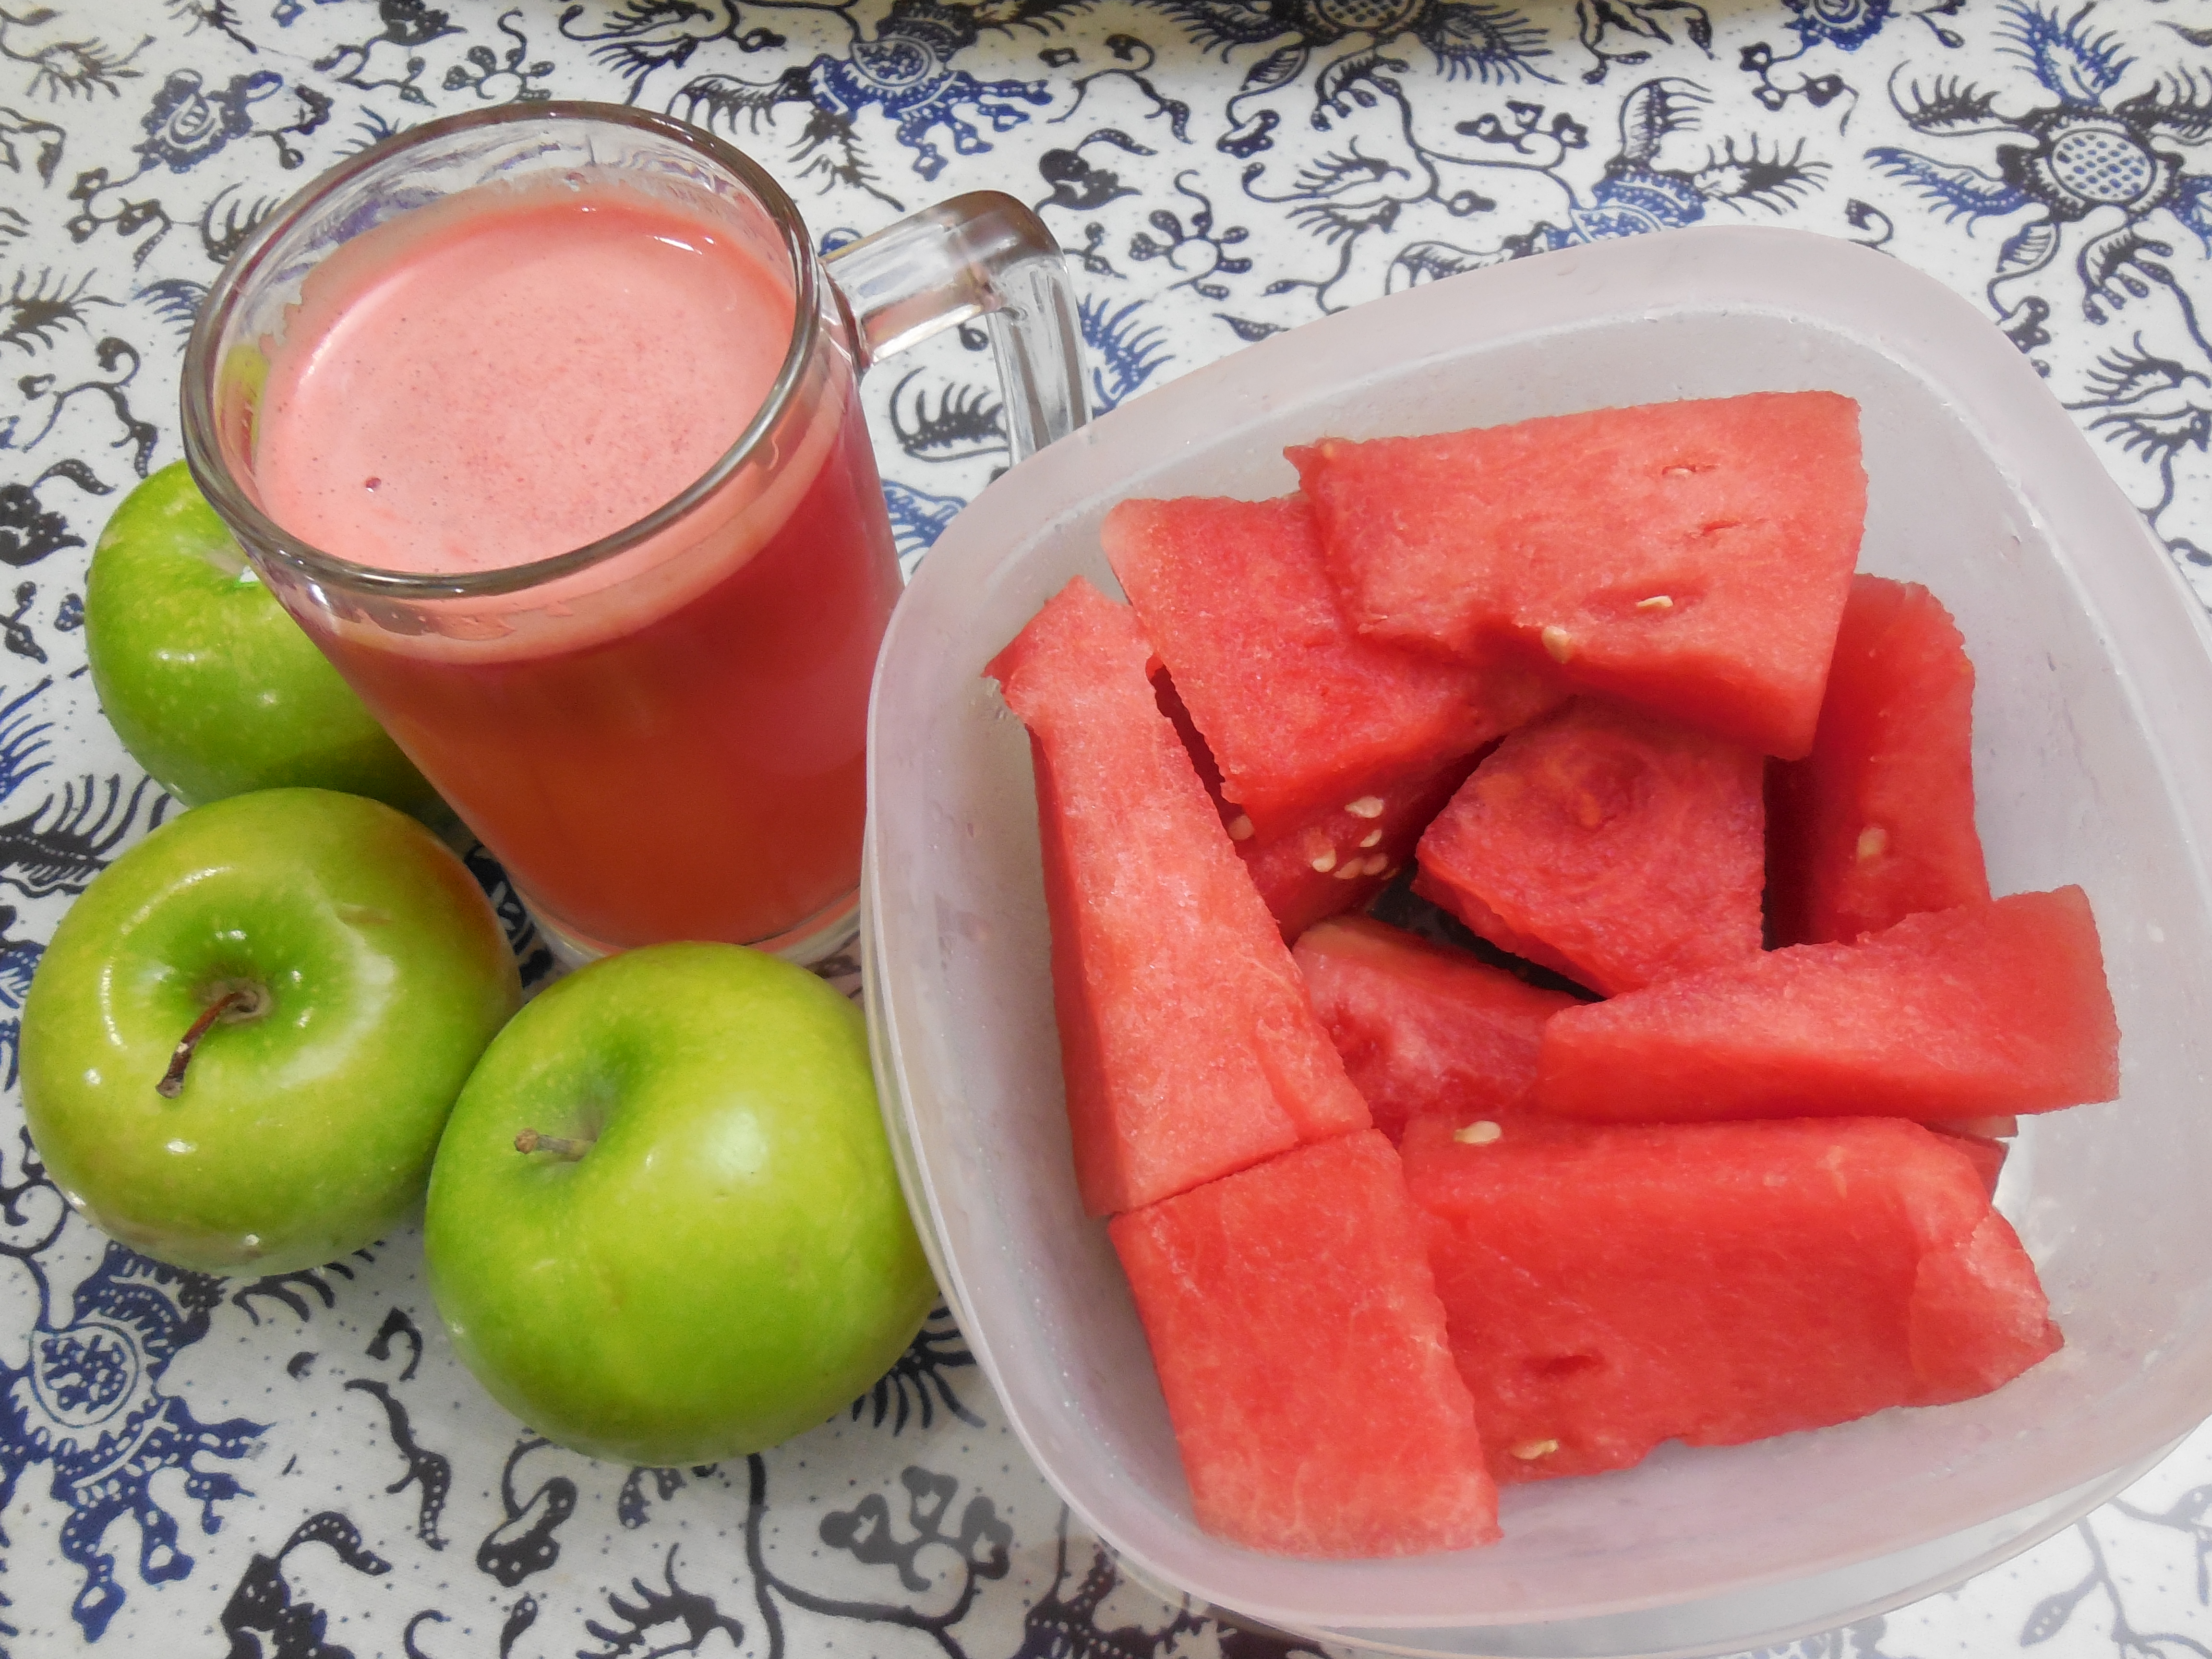 Watermelon chill. Watermelon Apple Juice. Love Apple Watermelon. Summer Watermelon Family. Apples! And Watermelon! And a dist.